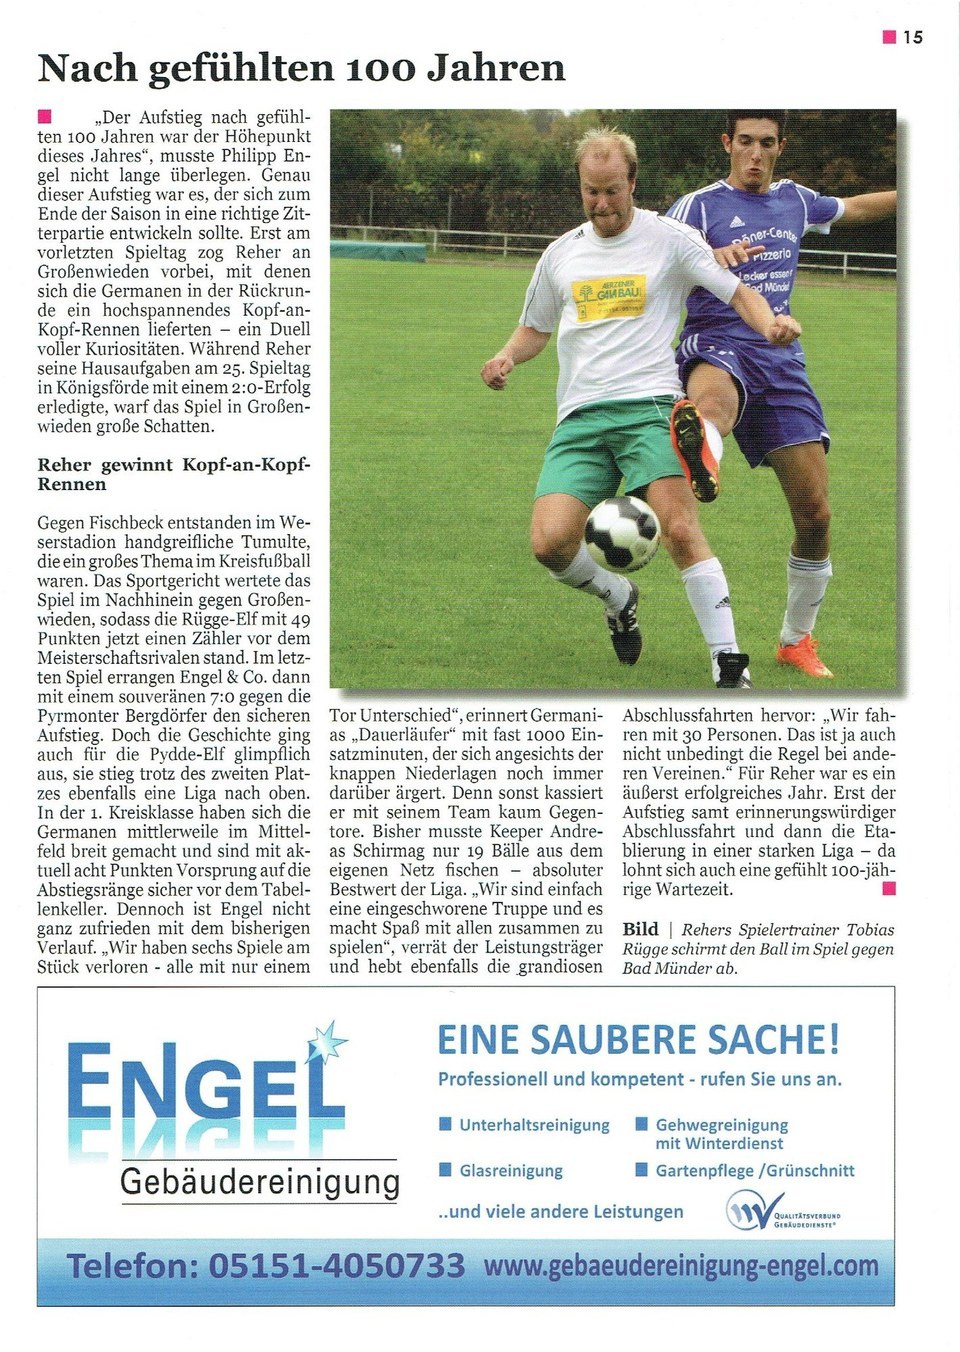 TSV Germania Reher 2014 Printmagazin